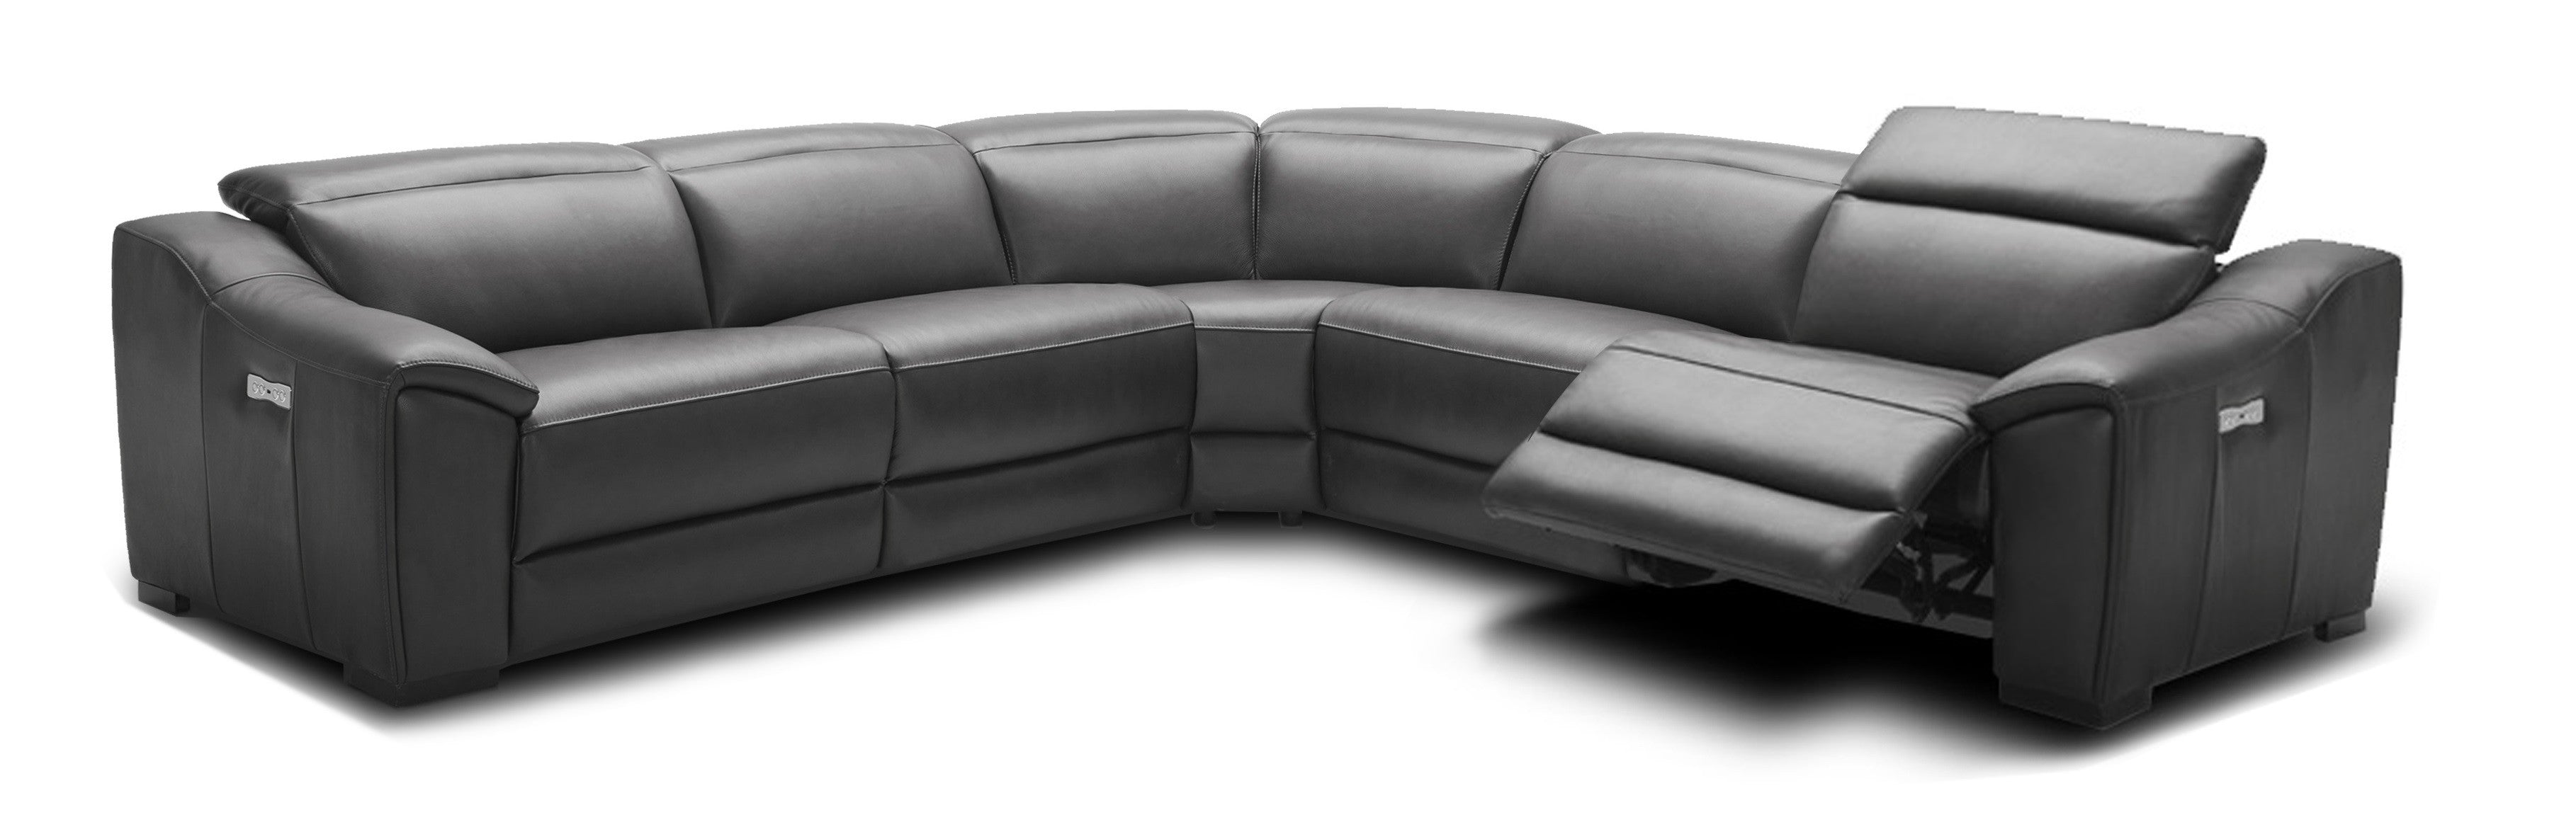 J&M Furniture Nova Motion Sectional (SKU18775)